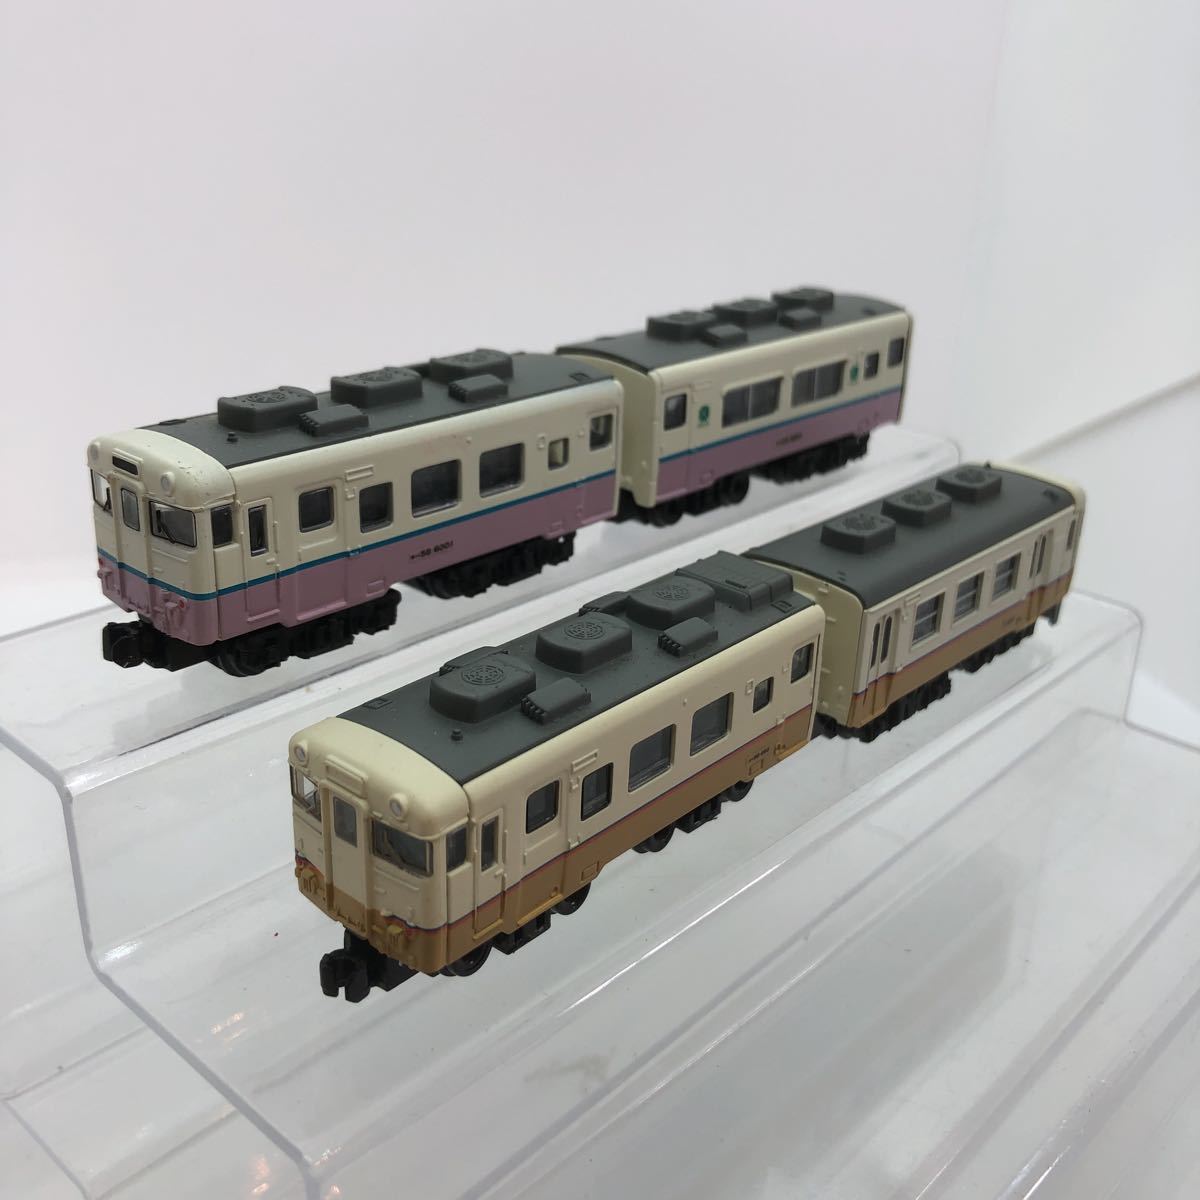 Bトレイン『キハ65,58,28キロ28 砂丘色』4両 - 鉄道模型